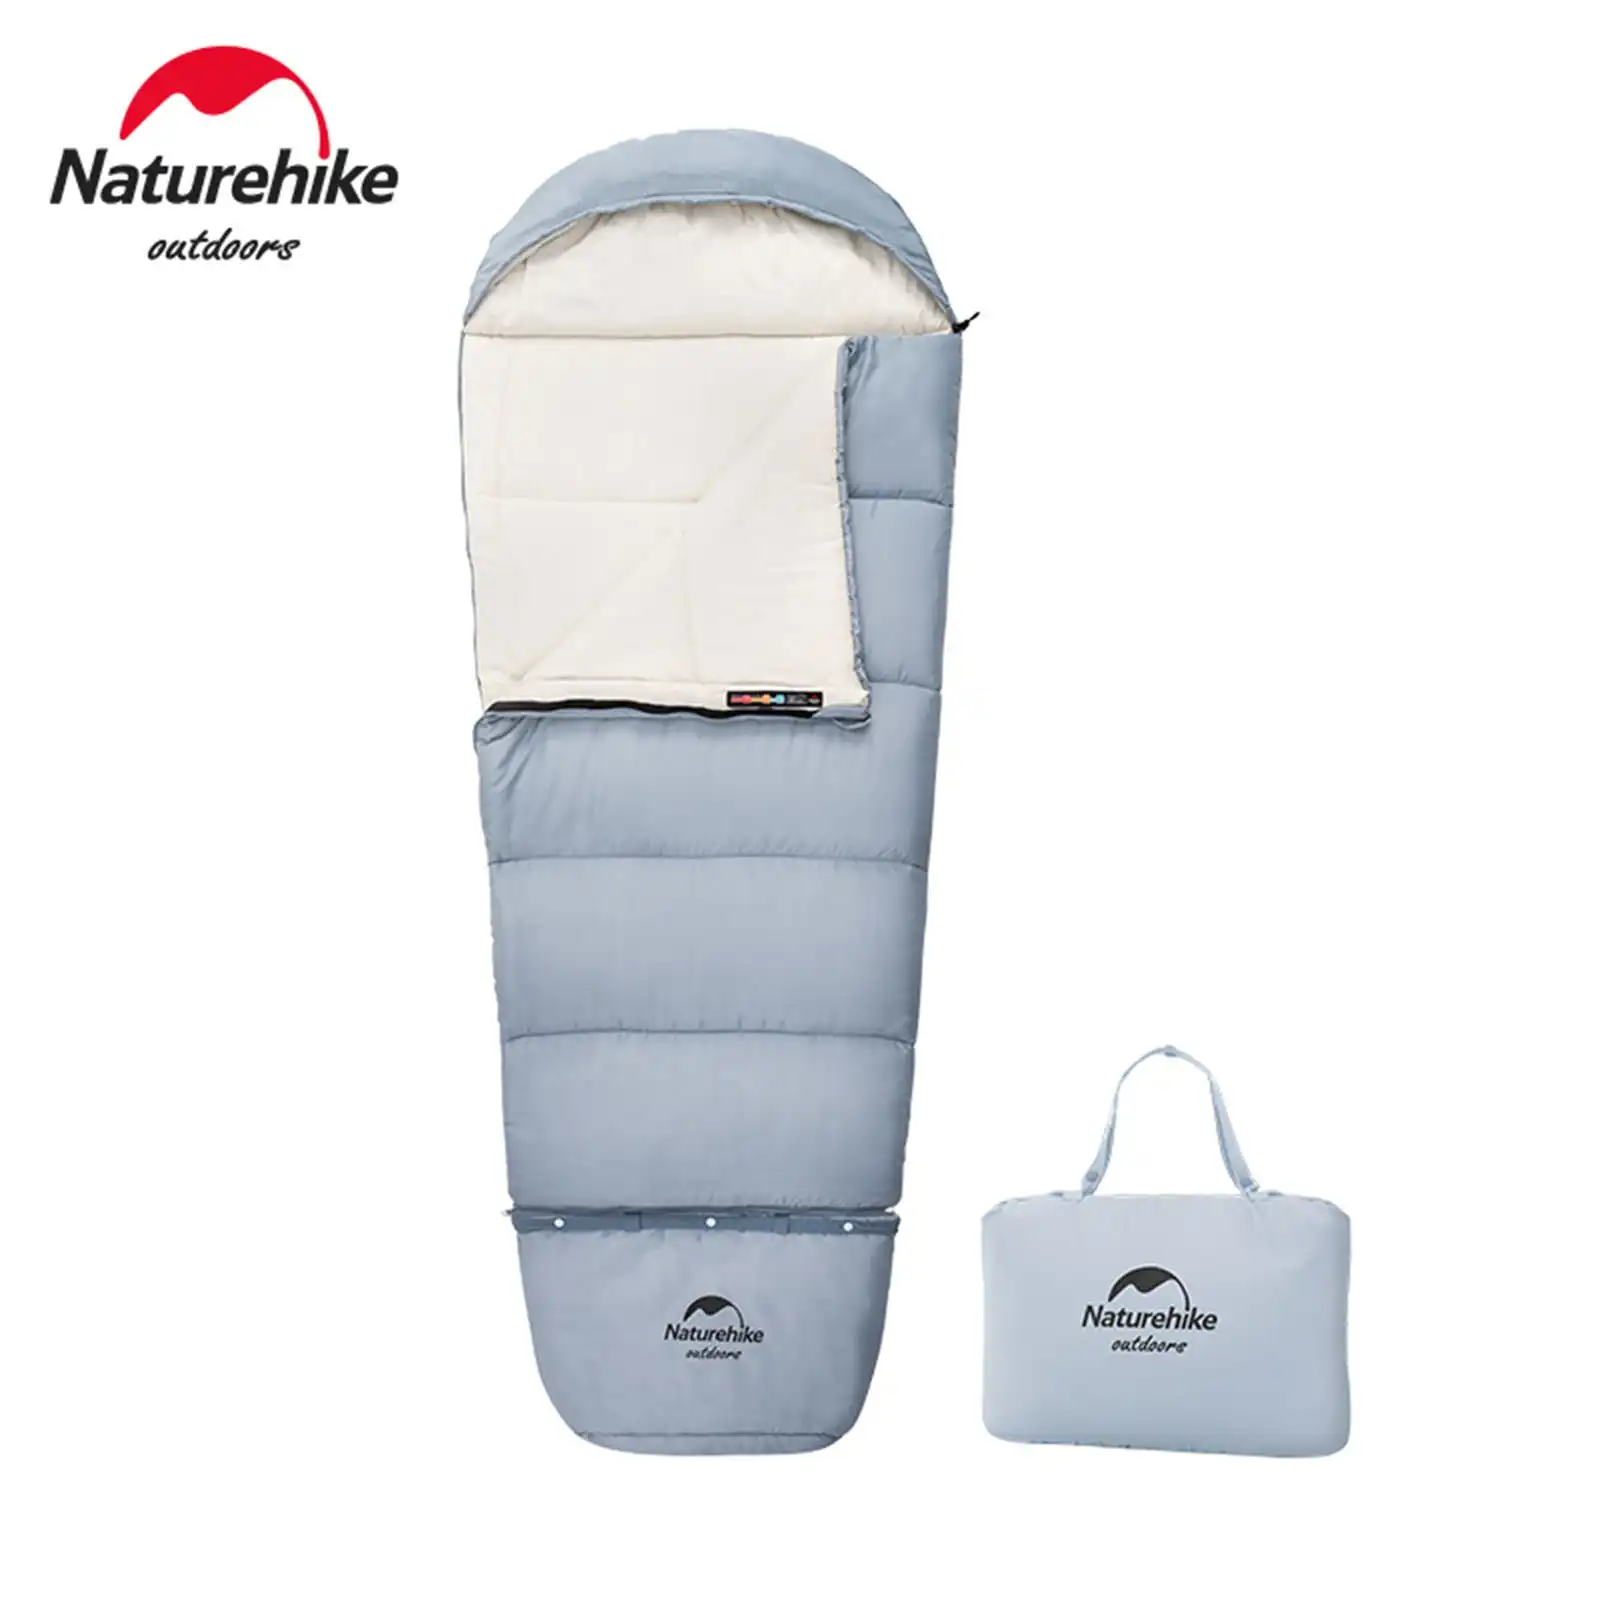 NatureHike Outdoor Children C300 Camping Sleeping Bag Hiking Gears Extended Stitching Envelope Children Kid Sleeping Bag - Blue